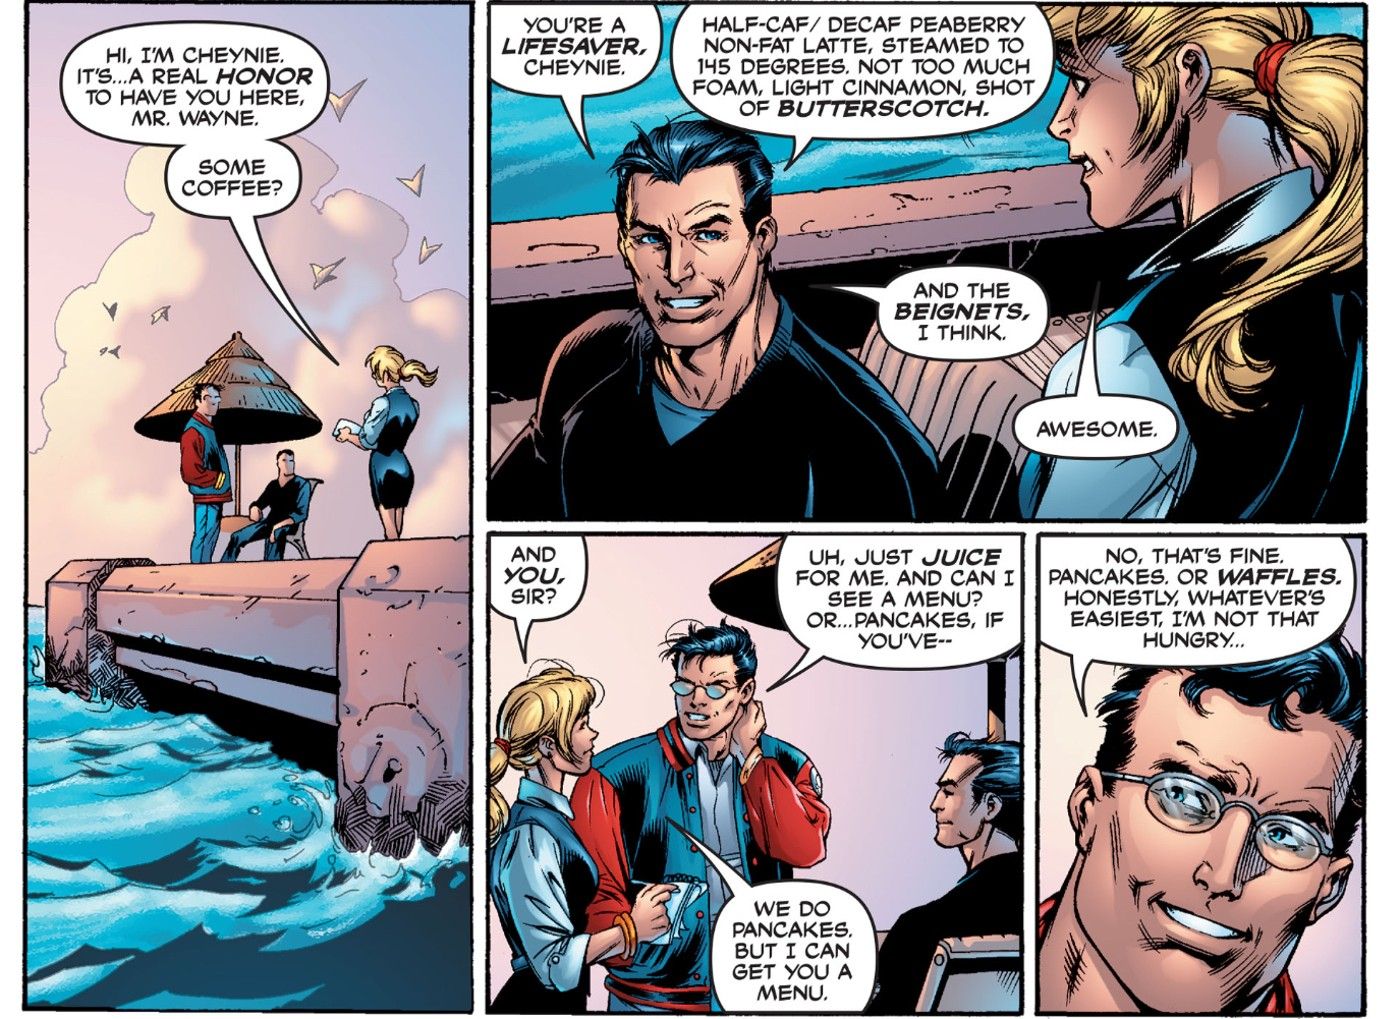 Bruce Wayne Batman and Clark Kent Superman Order Coffee and Juice on a Pier